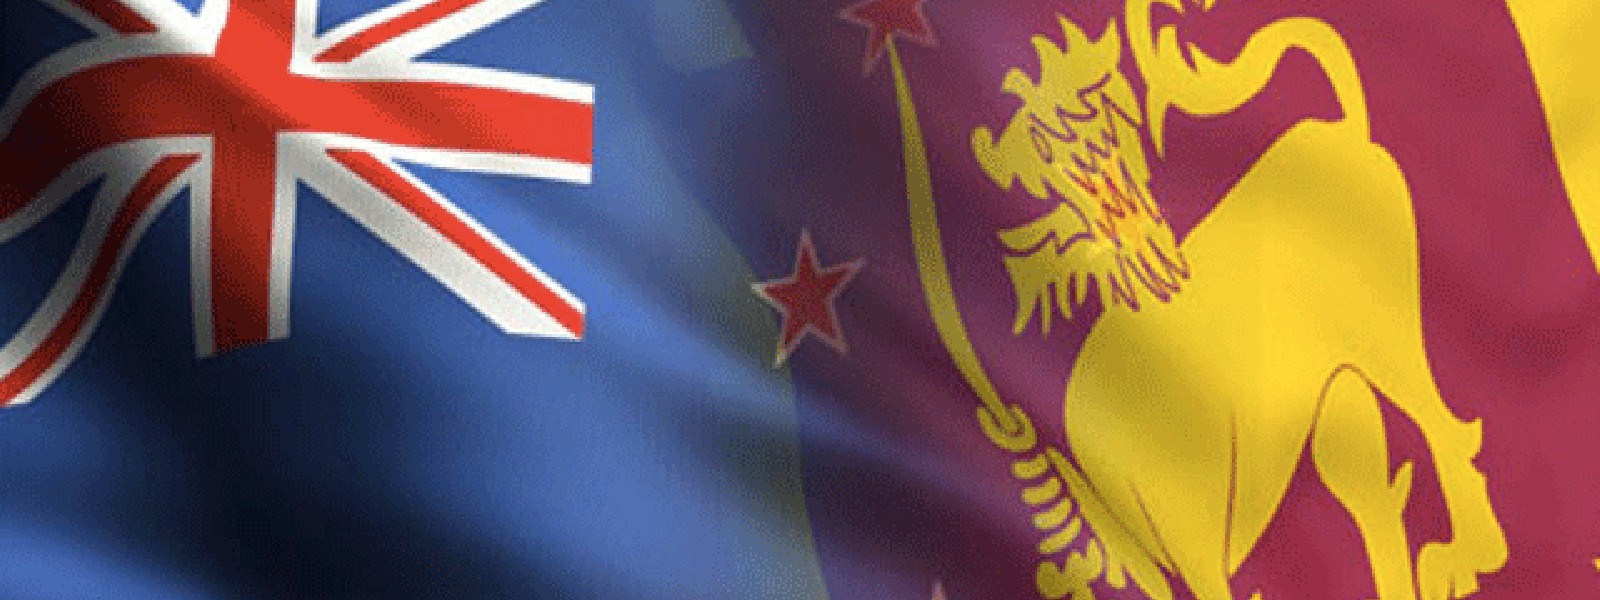 New Zealand revises travel advisory for Sri Lanka